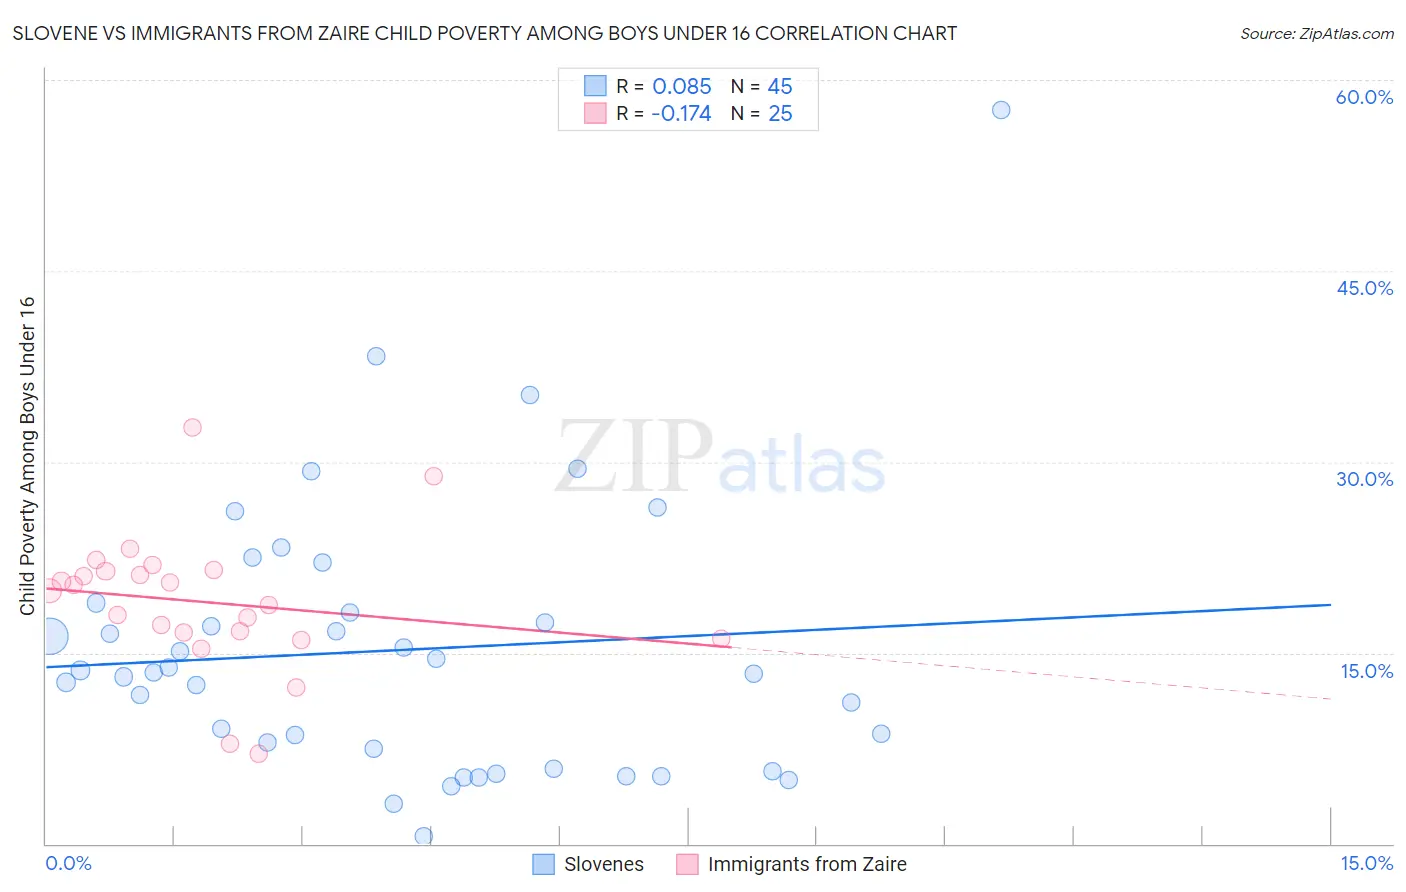 Slovene vs Immigrants from Zaire Child Poverty Among Boys Under 16